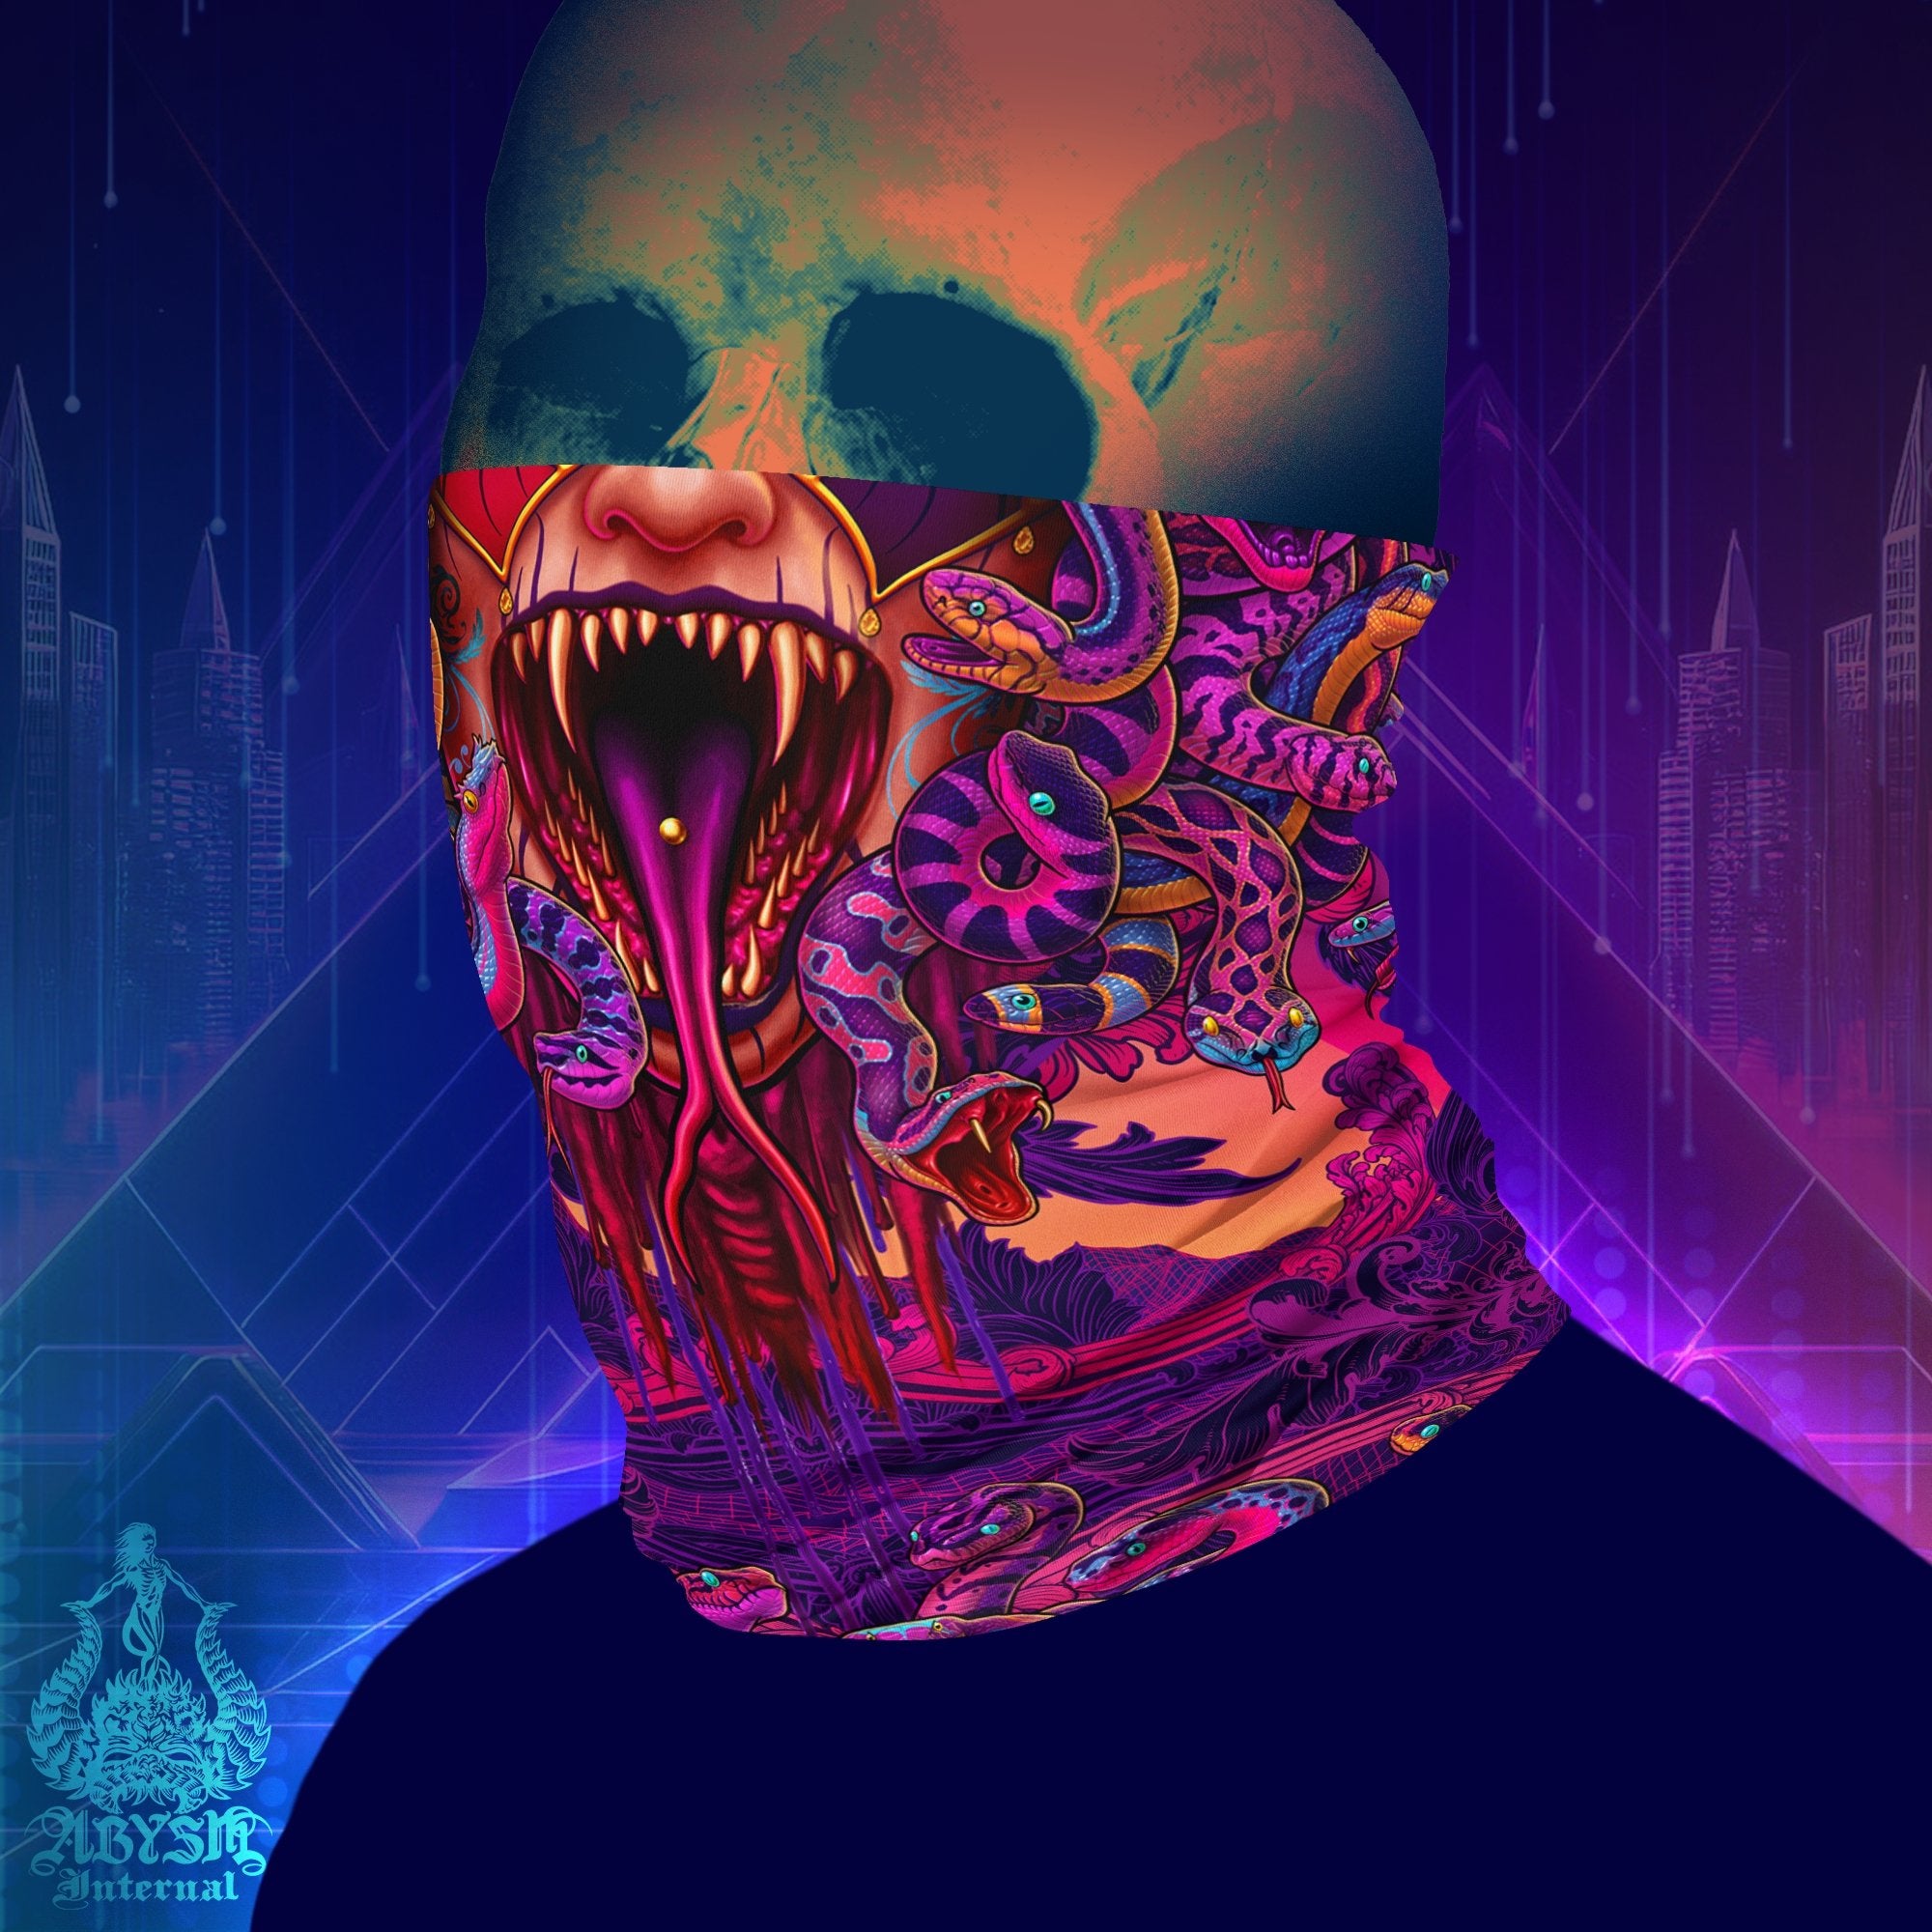 Medusa Neck Gaiter, Face Mask, Head Covering, Snakes Headband, Retrowave Skull, Vaporwave Outfit - Pastel Harlequin, 4 Face Options - Abysm Internal